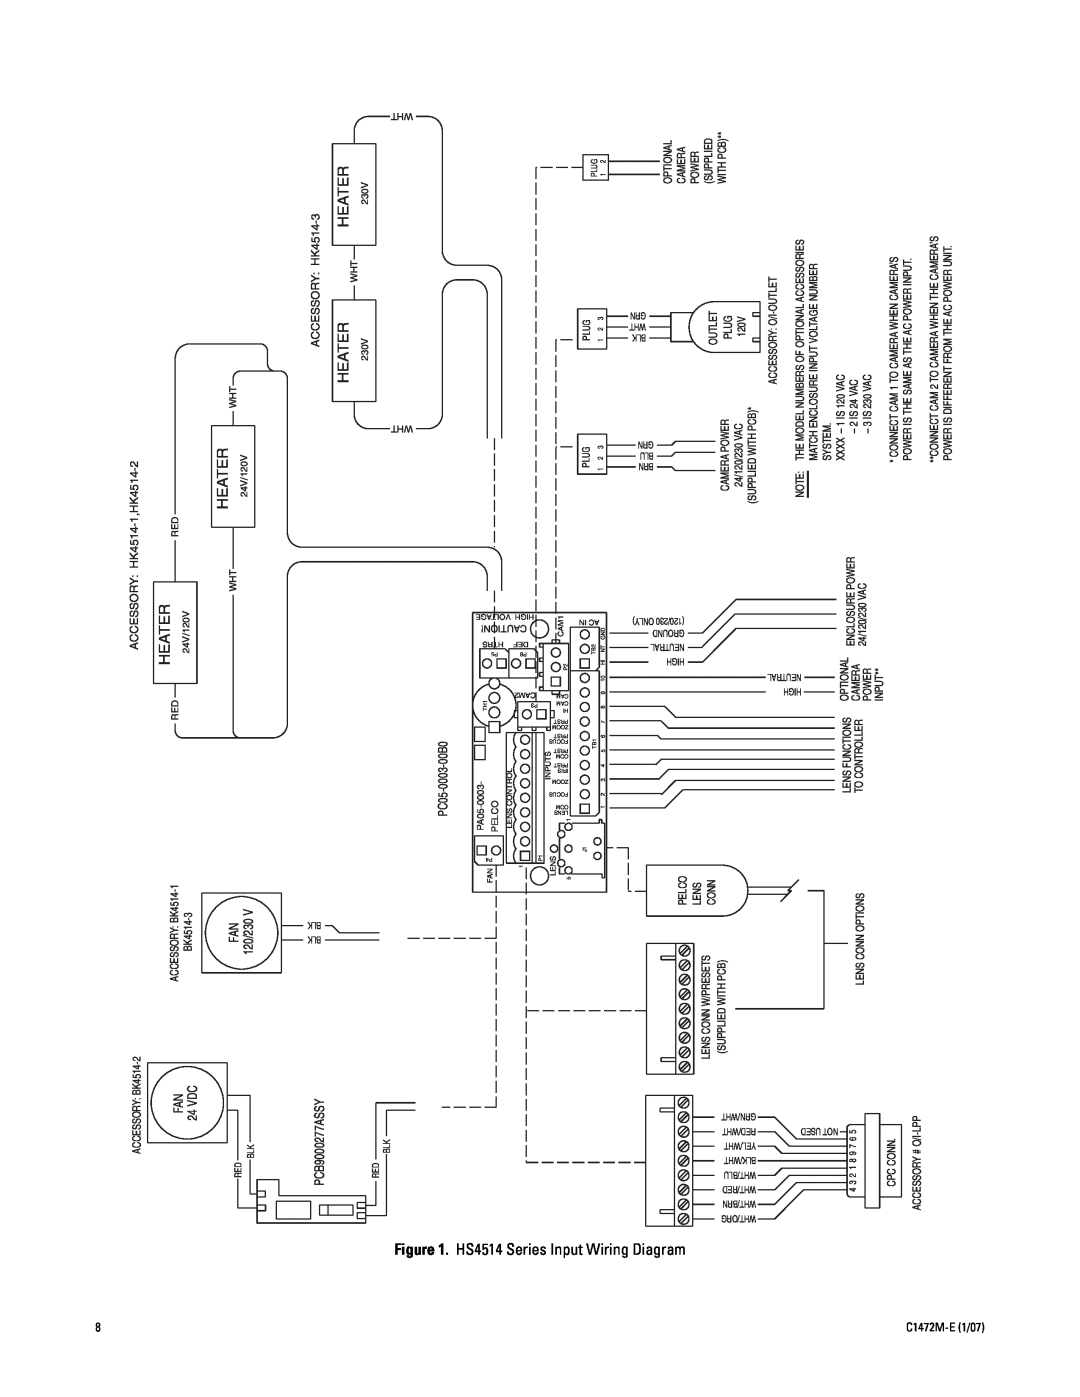 Pelco Heater, Diagram, HS4514 Series Input Wiring, ACCESSORY BK4514-2ACCESSORY HK4514-1,HK4514-2, ACCESSORY HK4514-3 